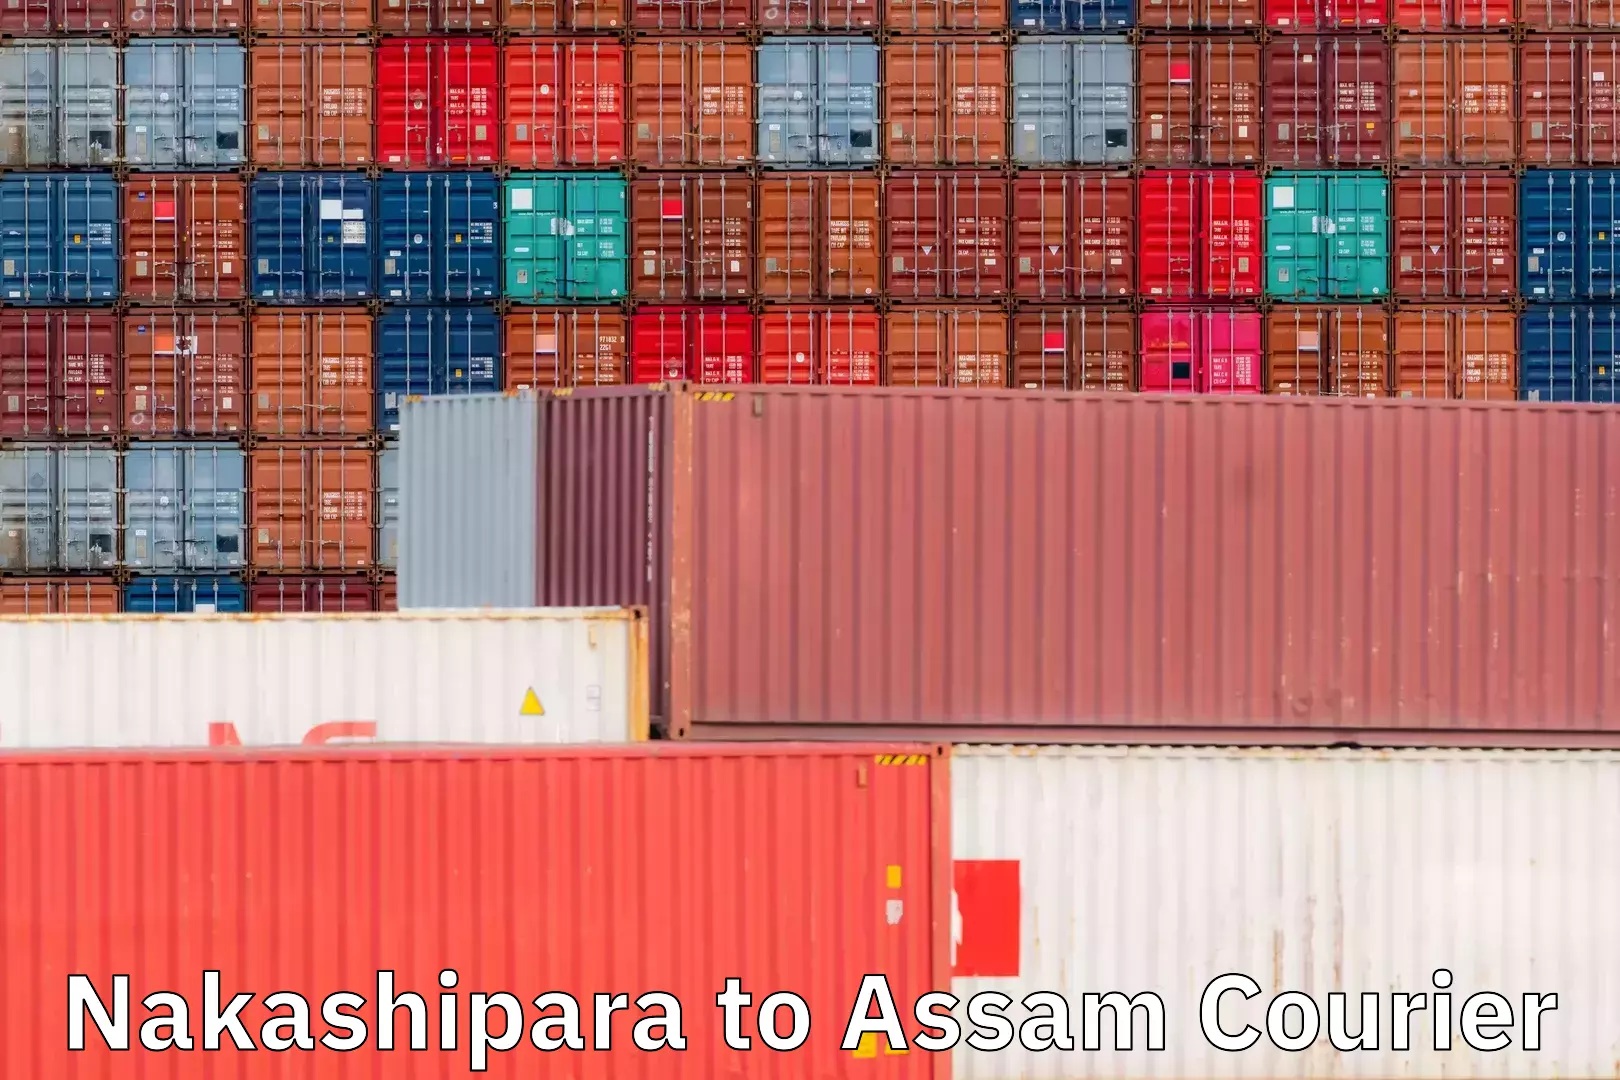 Express delivery capabilities Nakashipara to Assam